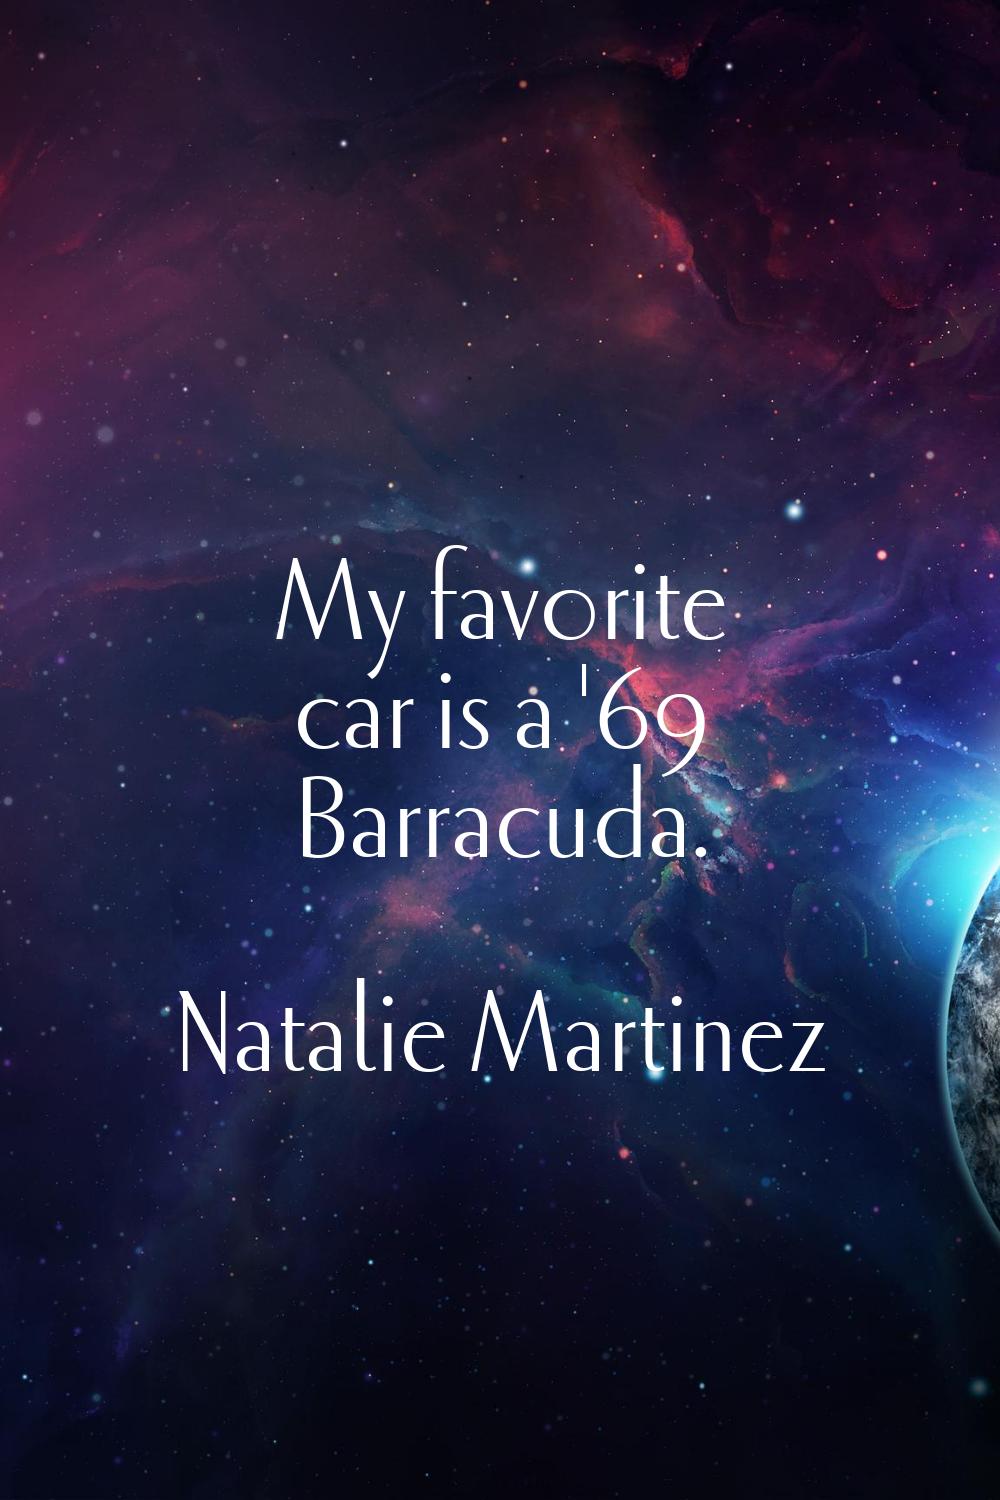 My favorite car is a '69 Barracuda.